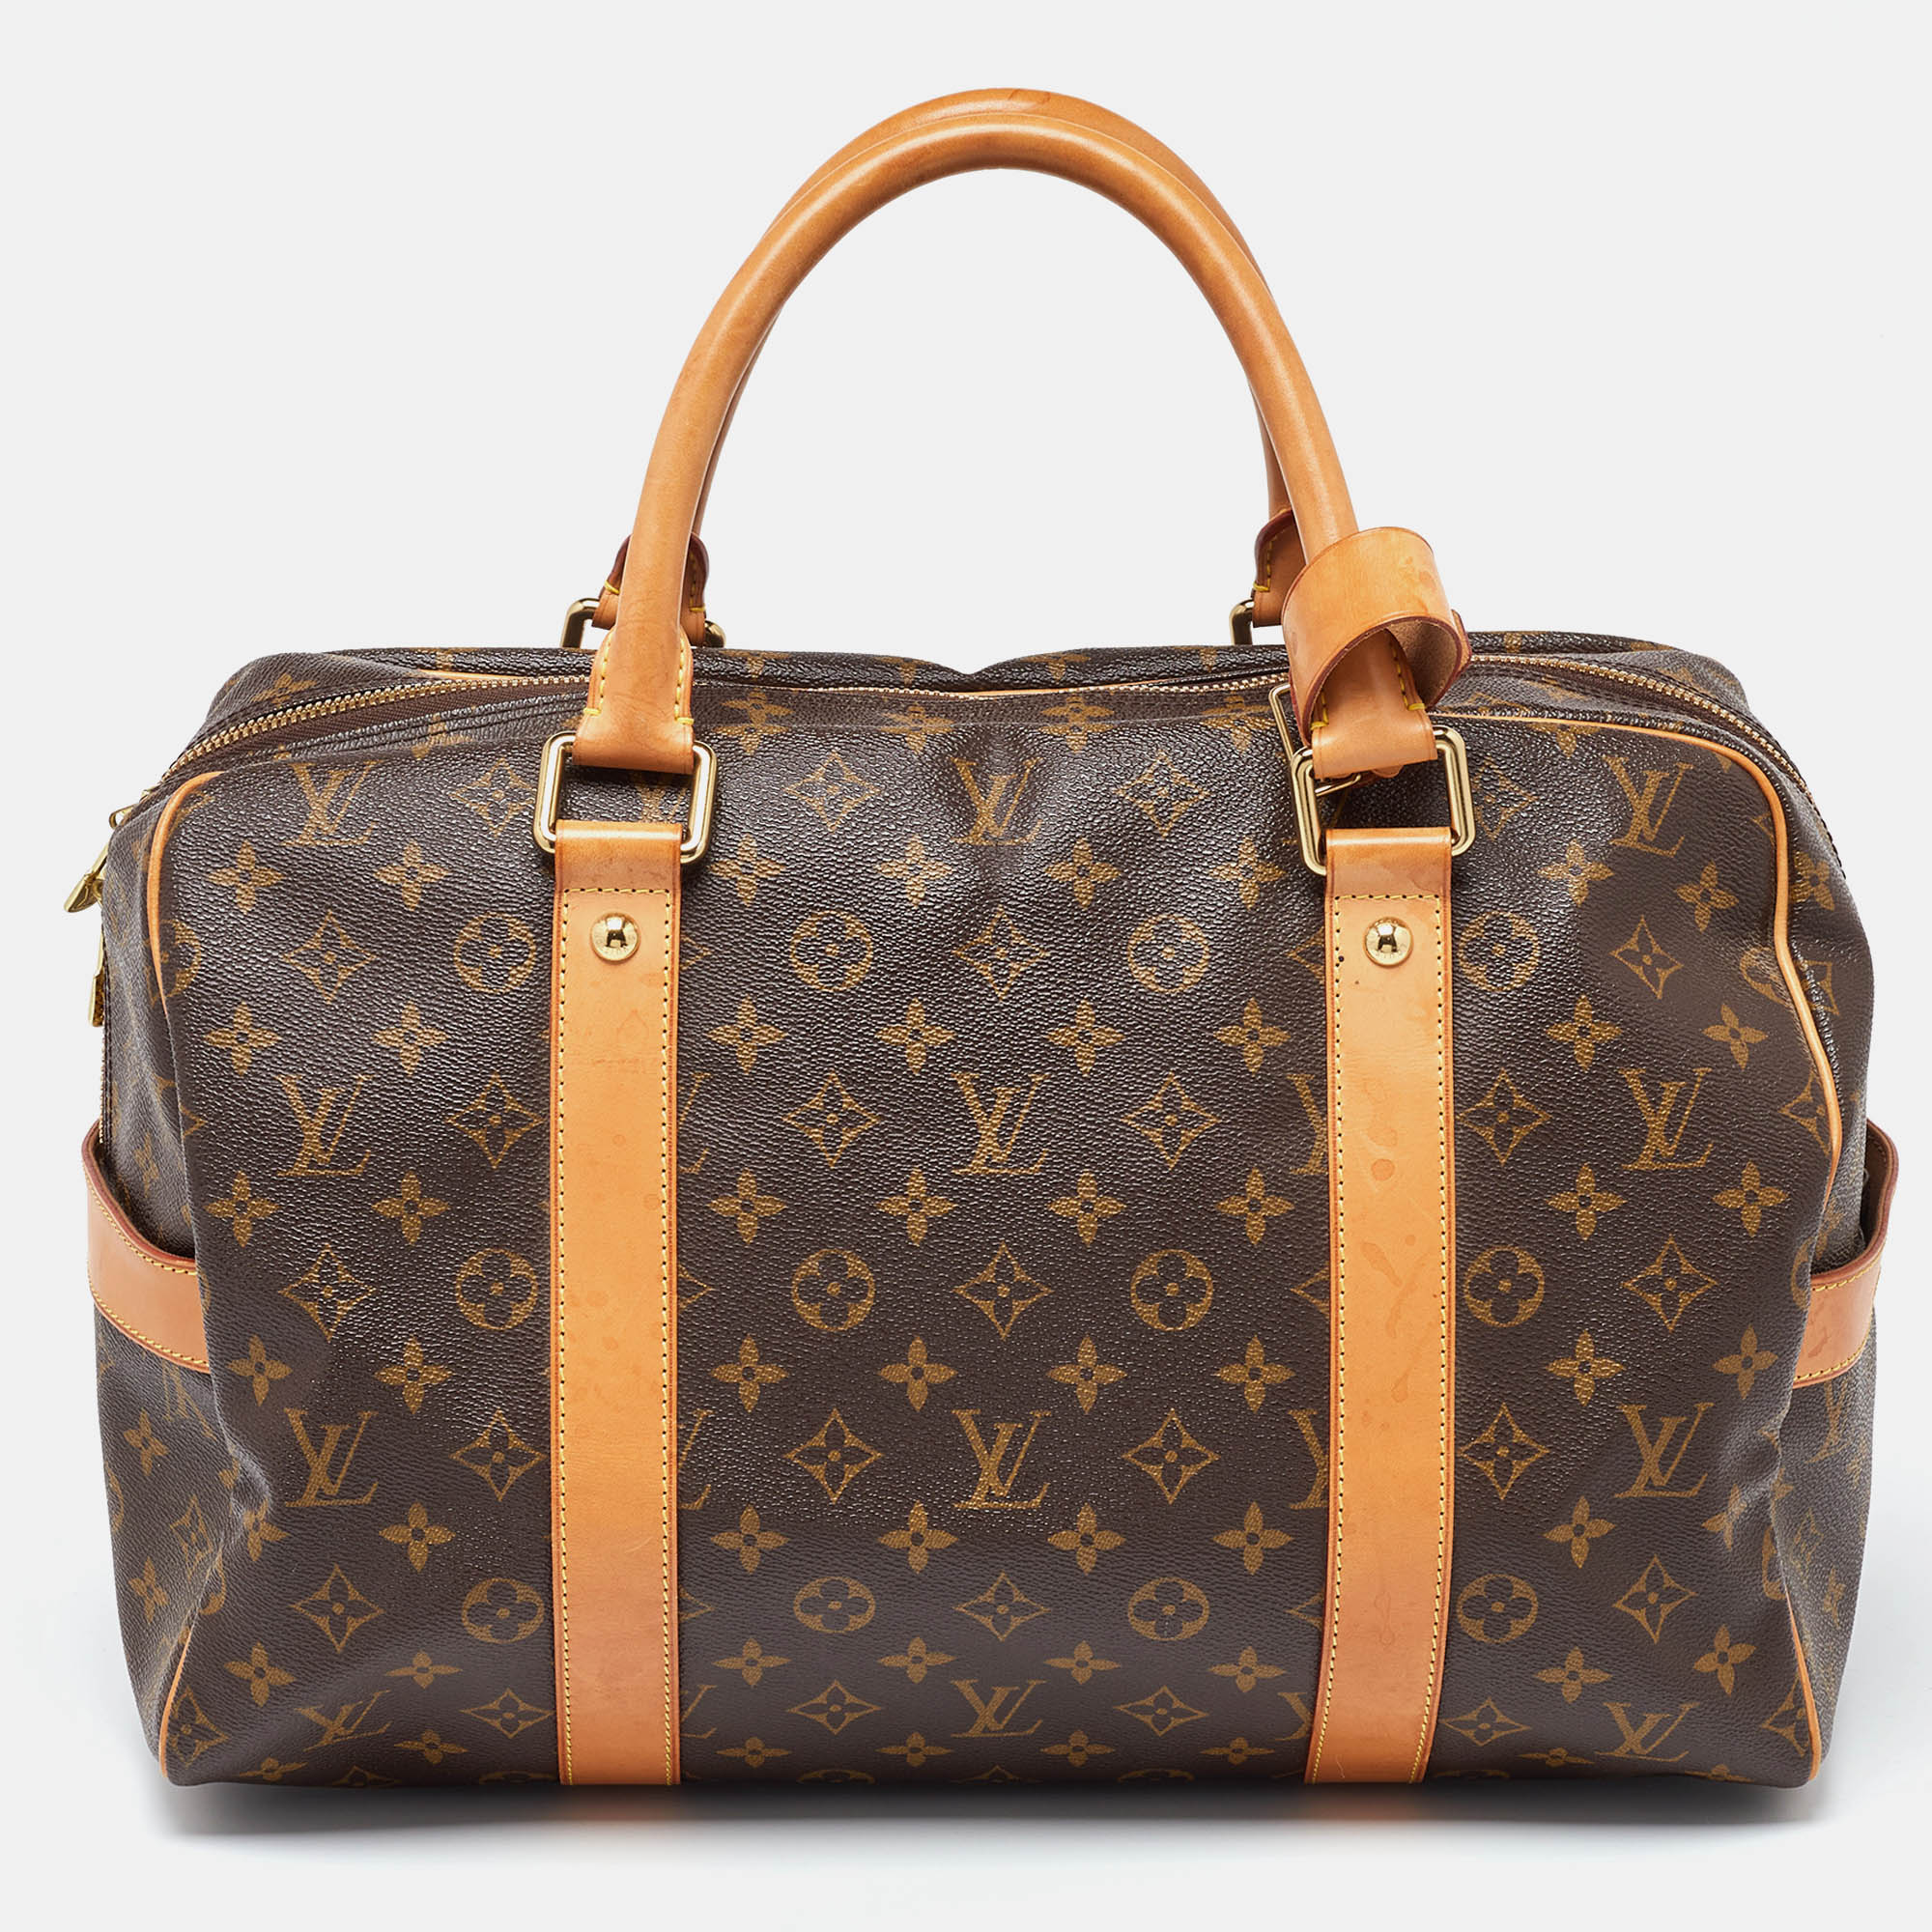 Louis vuitton monogram canvas carryall duffel bag